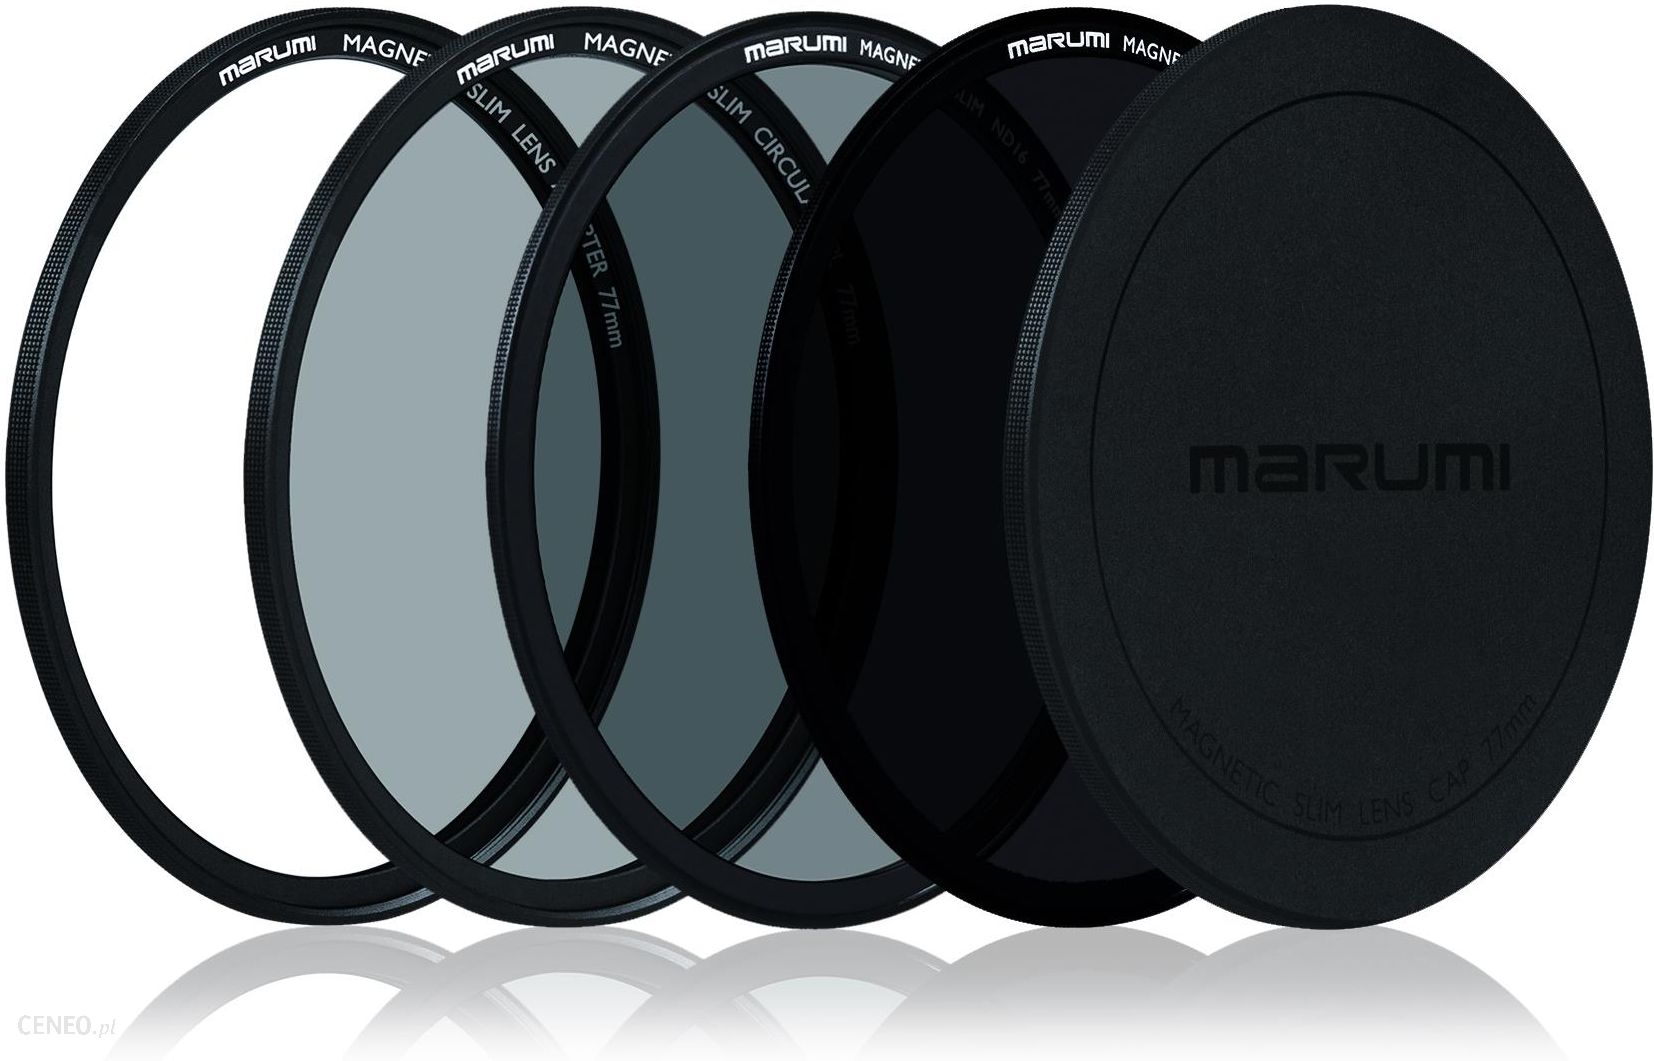 Filtr do obiektywu Marumi Magnetic Slim Advanced Kit 82 mm - Ceny 